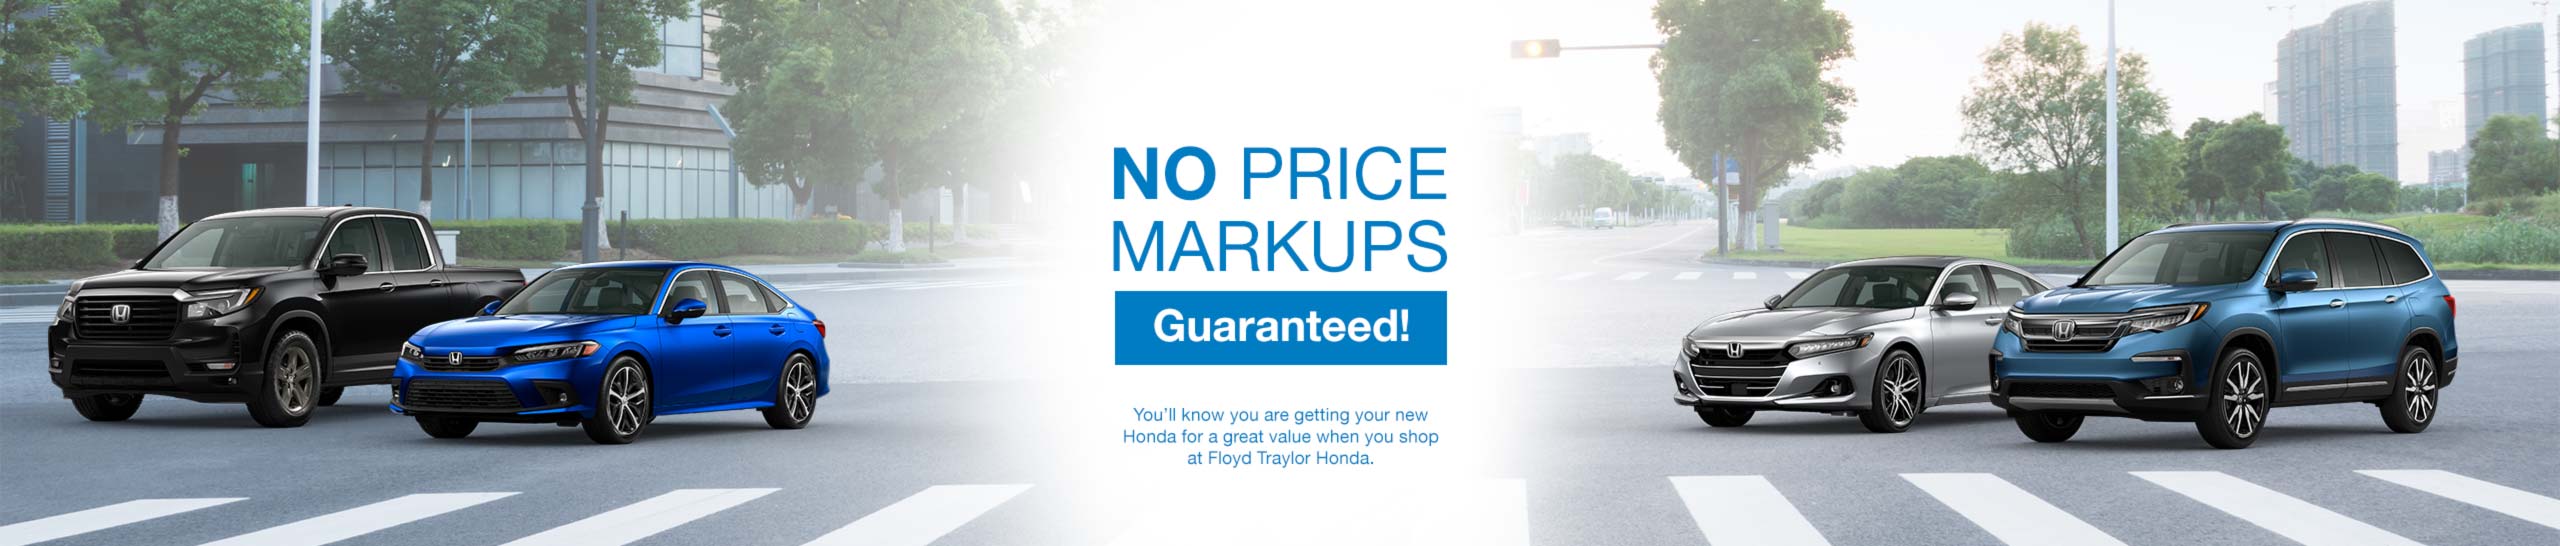 No Price Markups